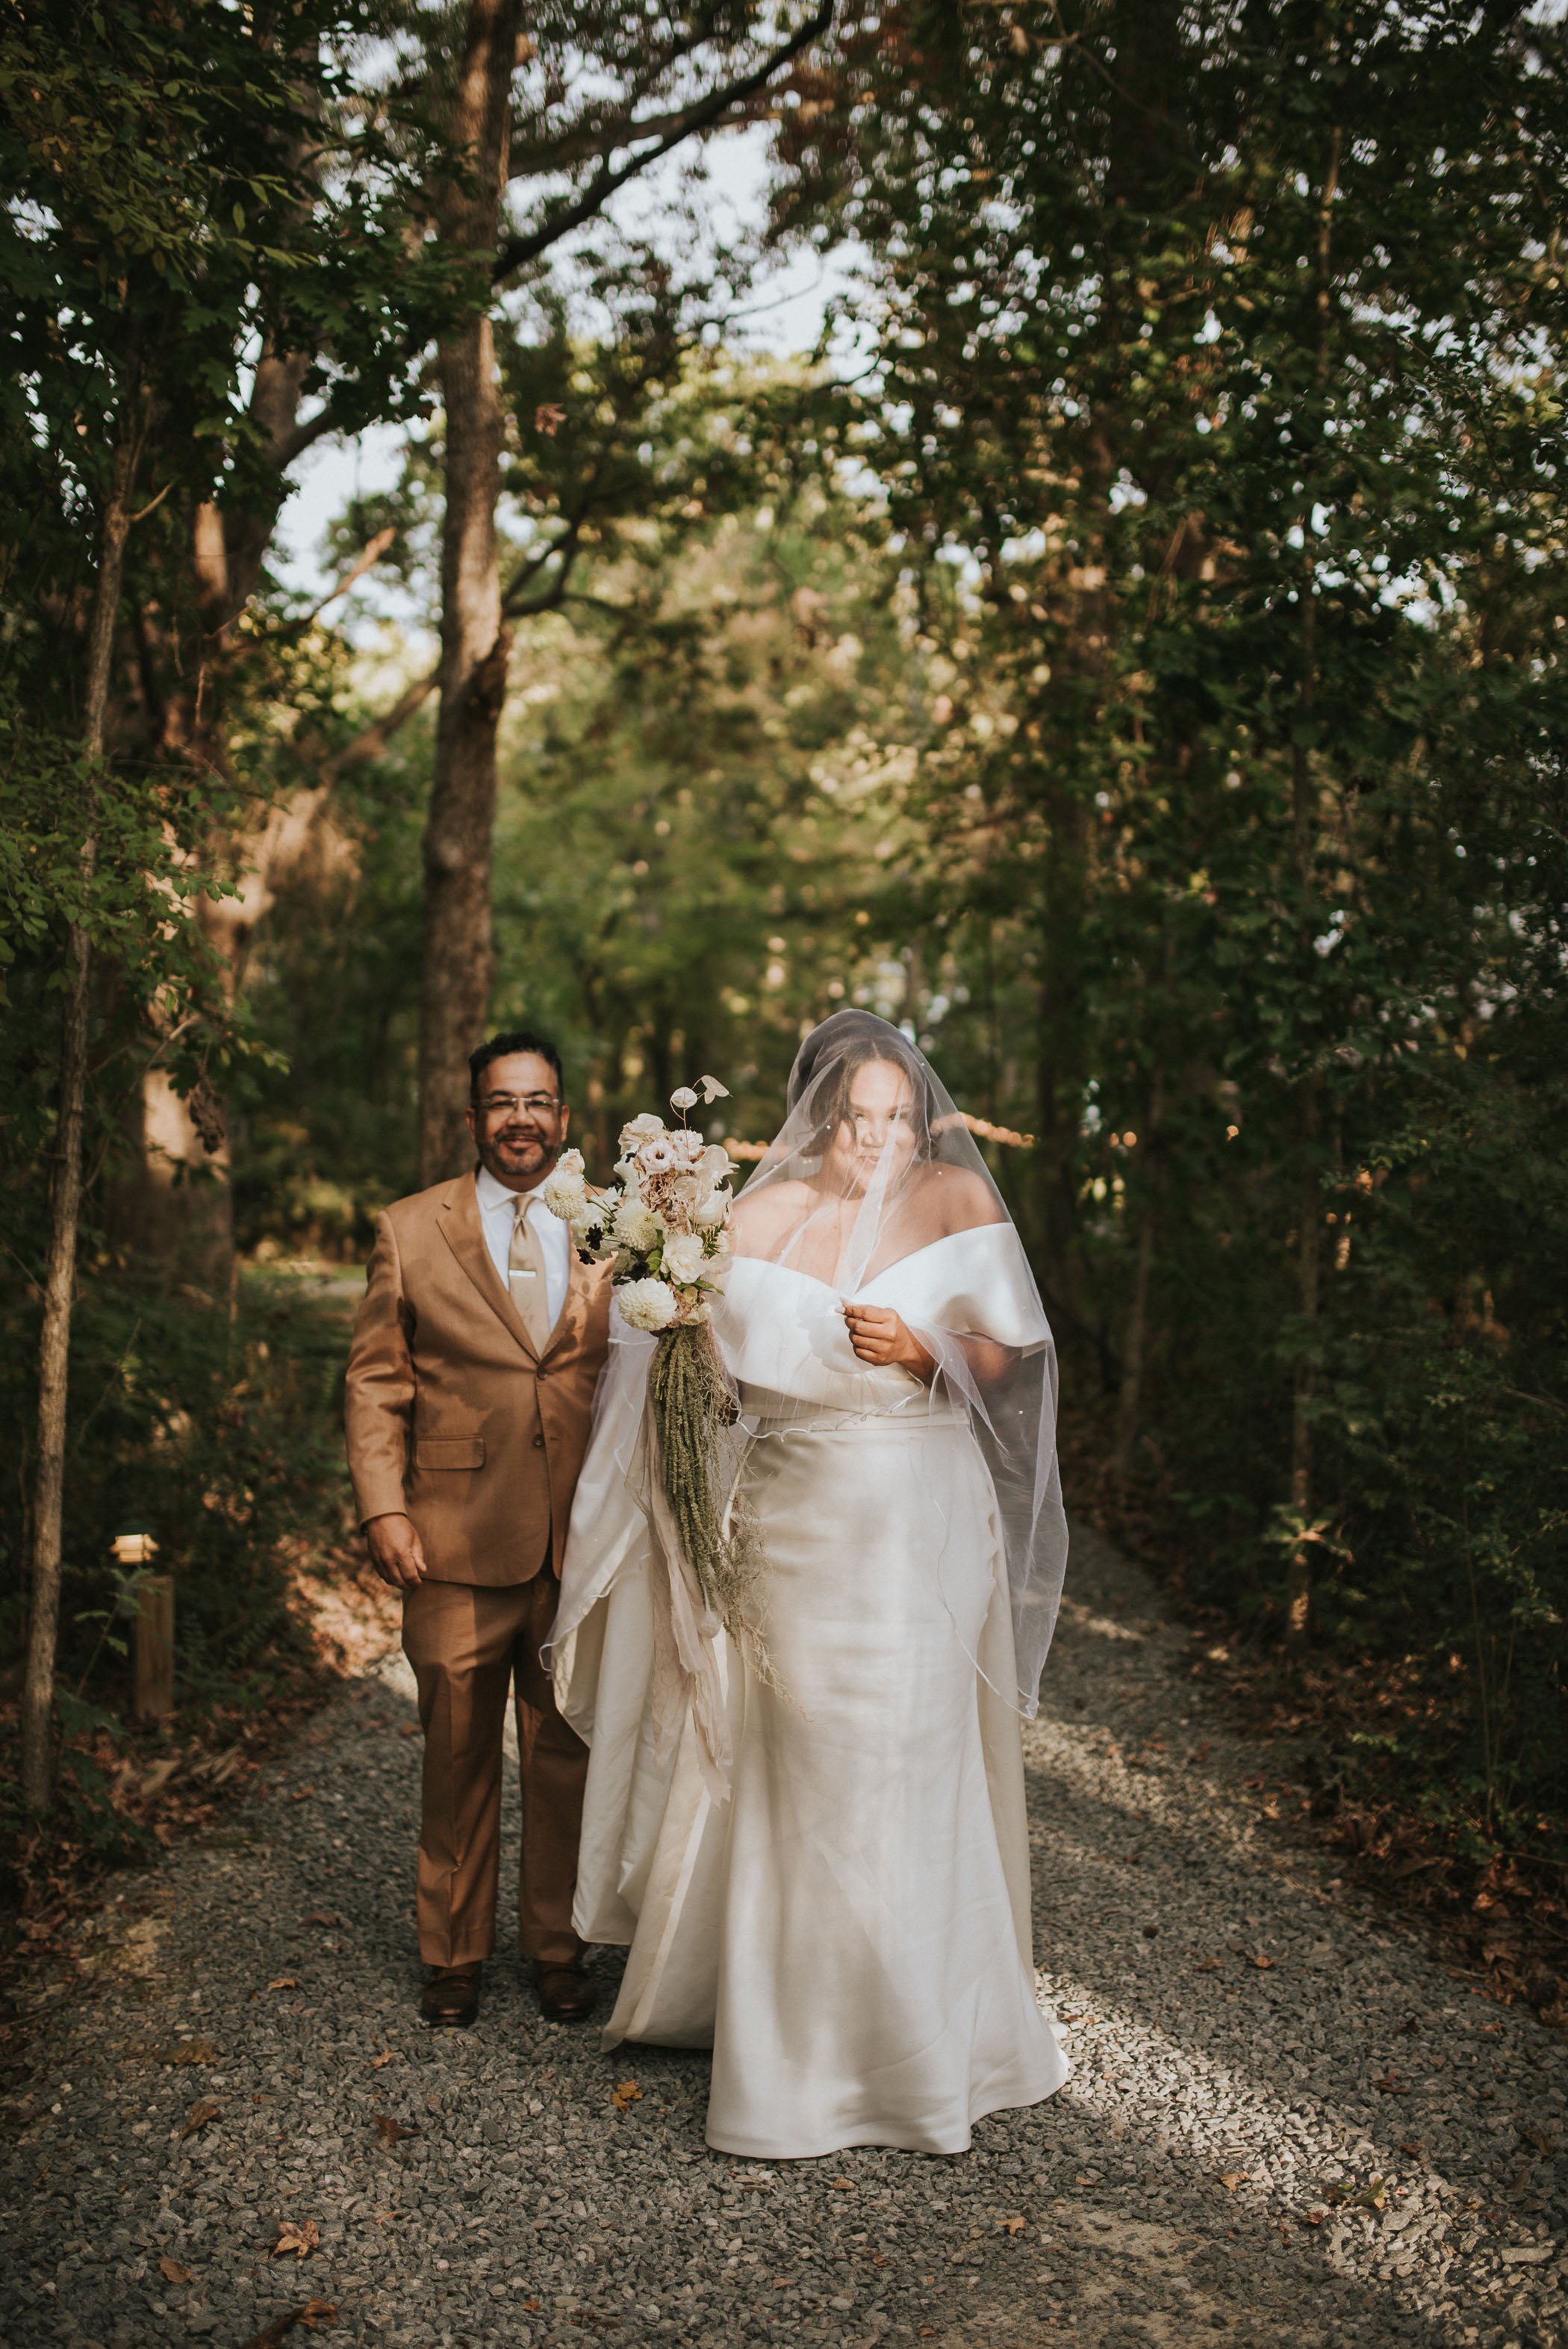 Whimsical Romance meets Southern Charm in North Carolina Wedding